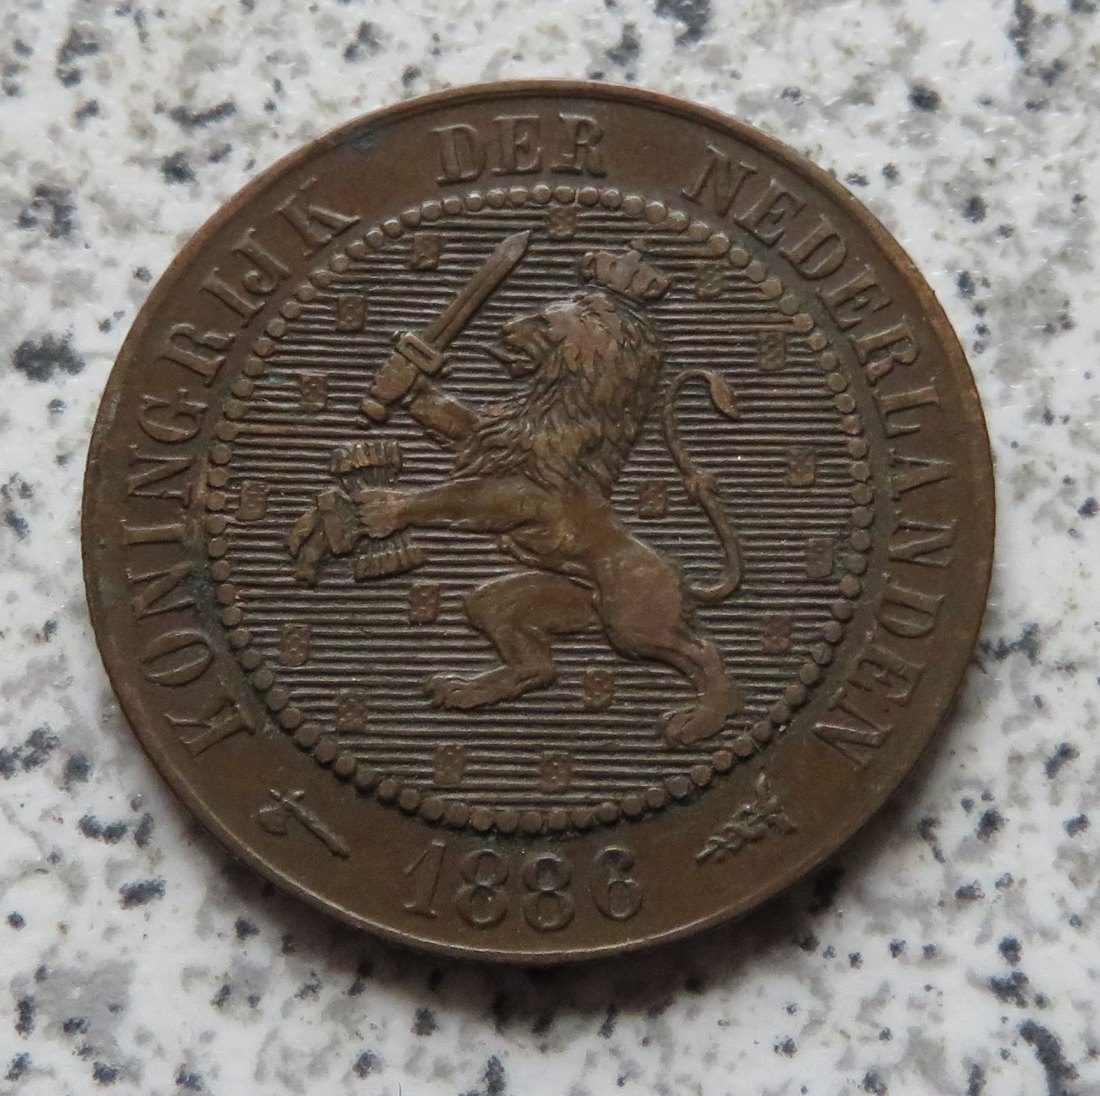  Niederlande 2,5 Cent 1886 / 2 1/2 Cent 1886   